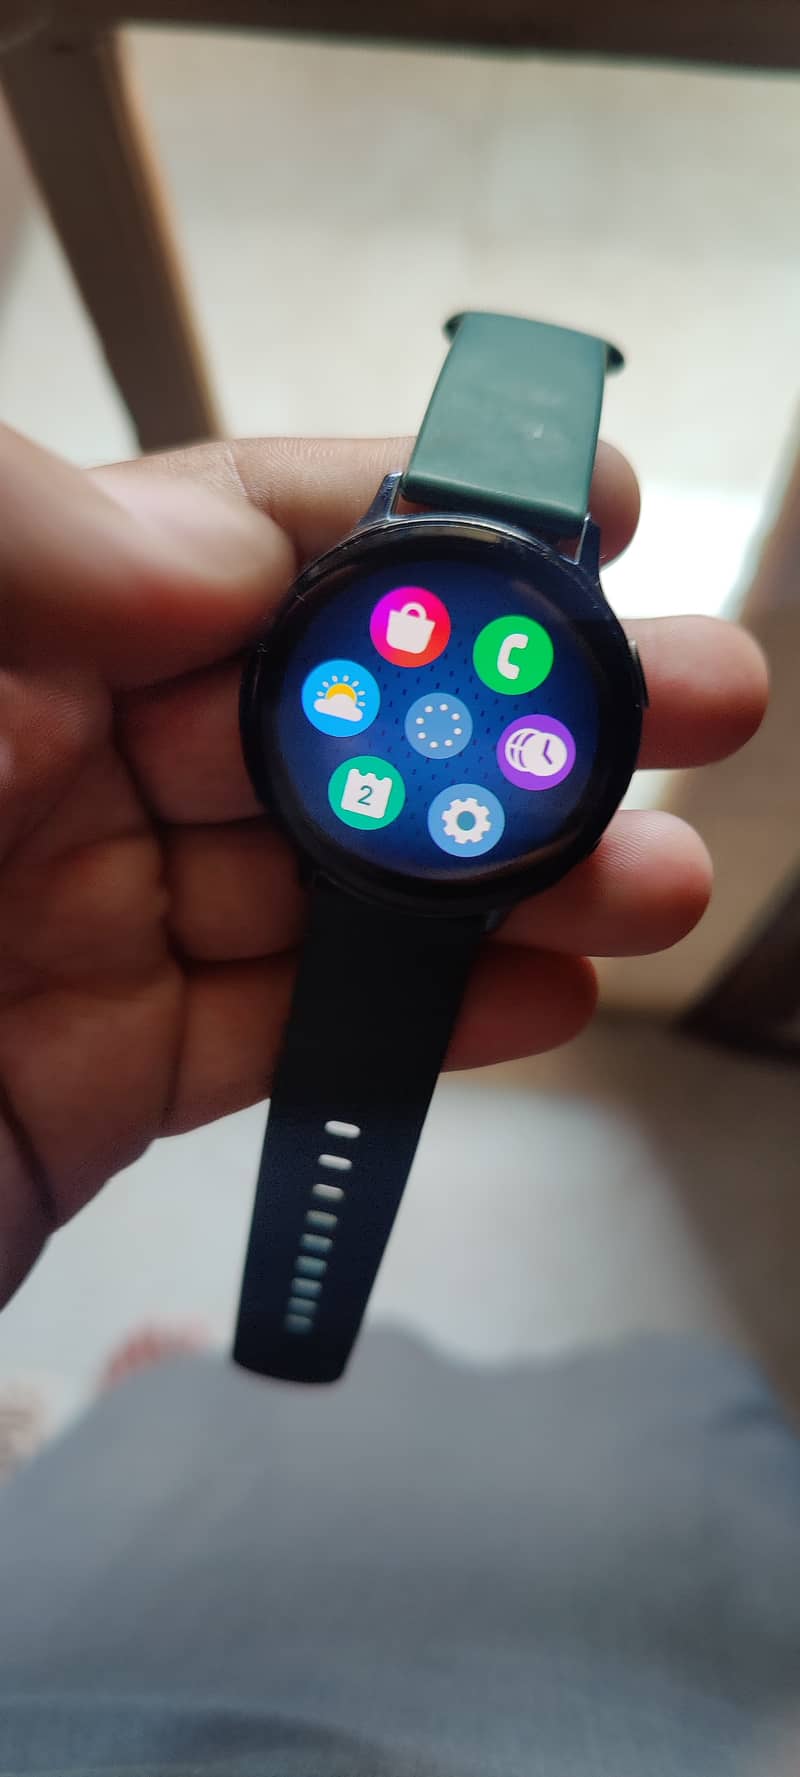 Samsung active 2 smart watch 12